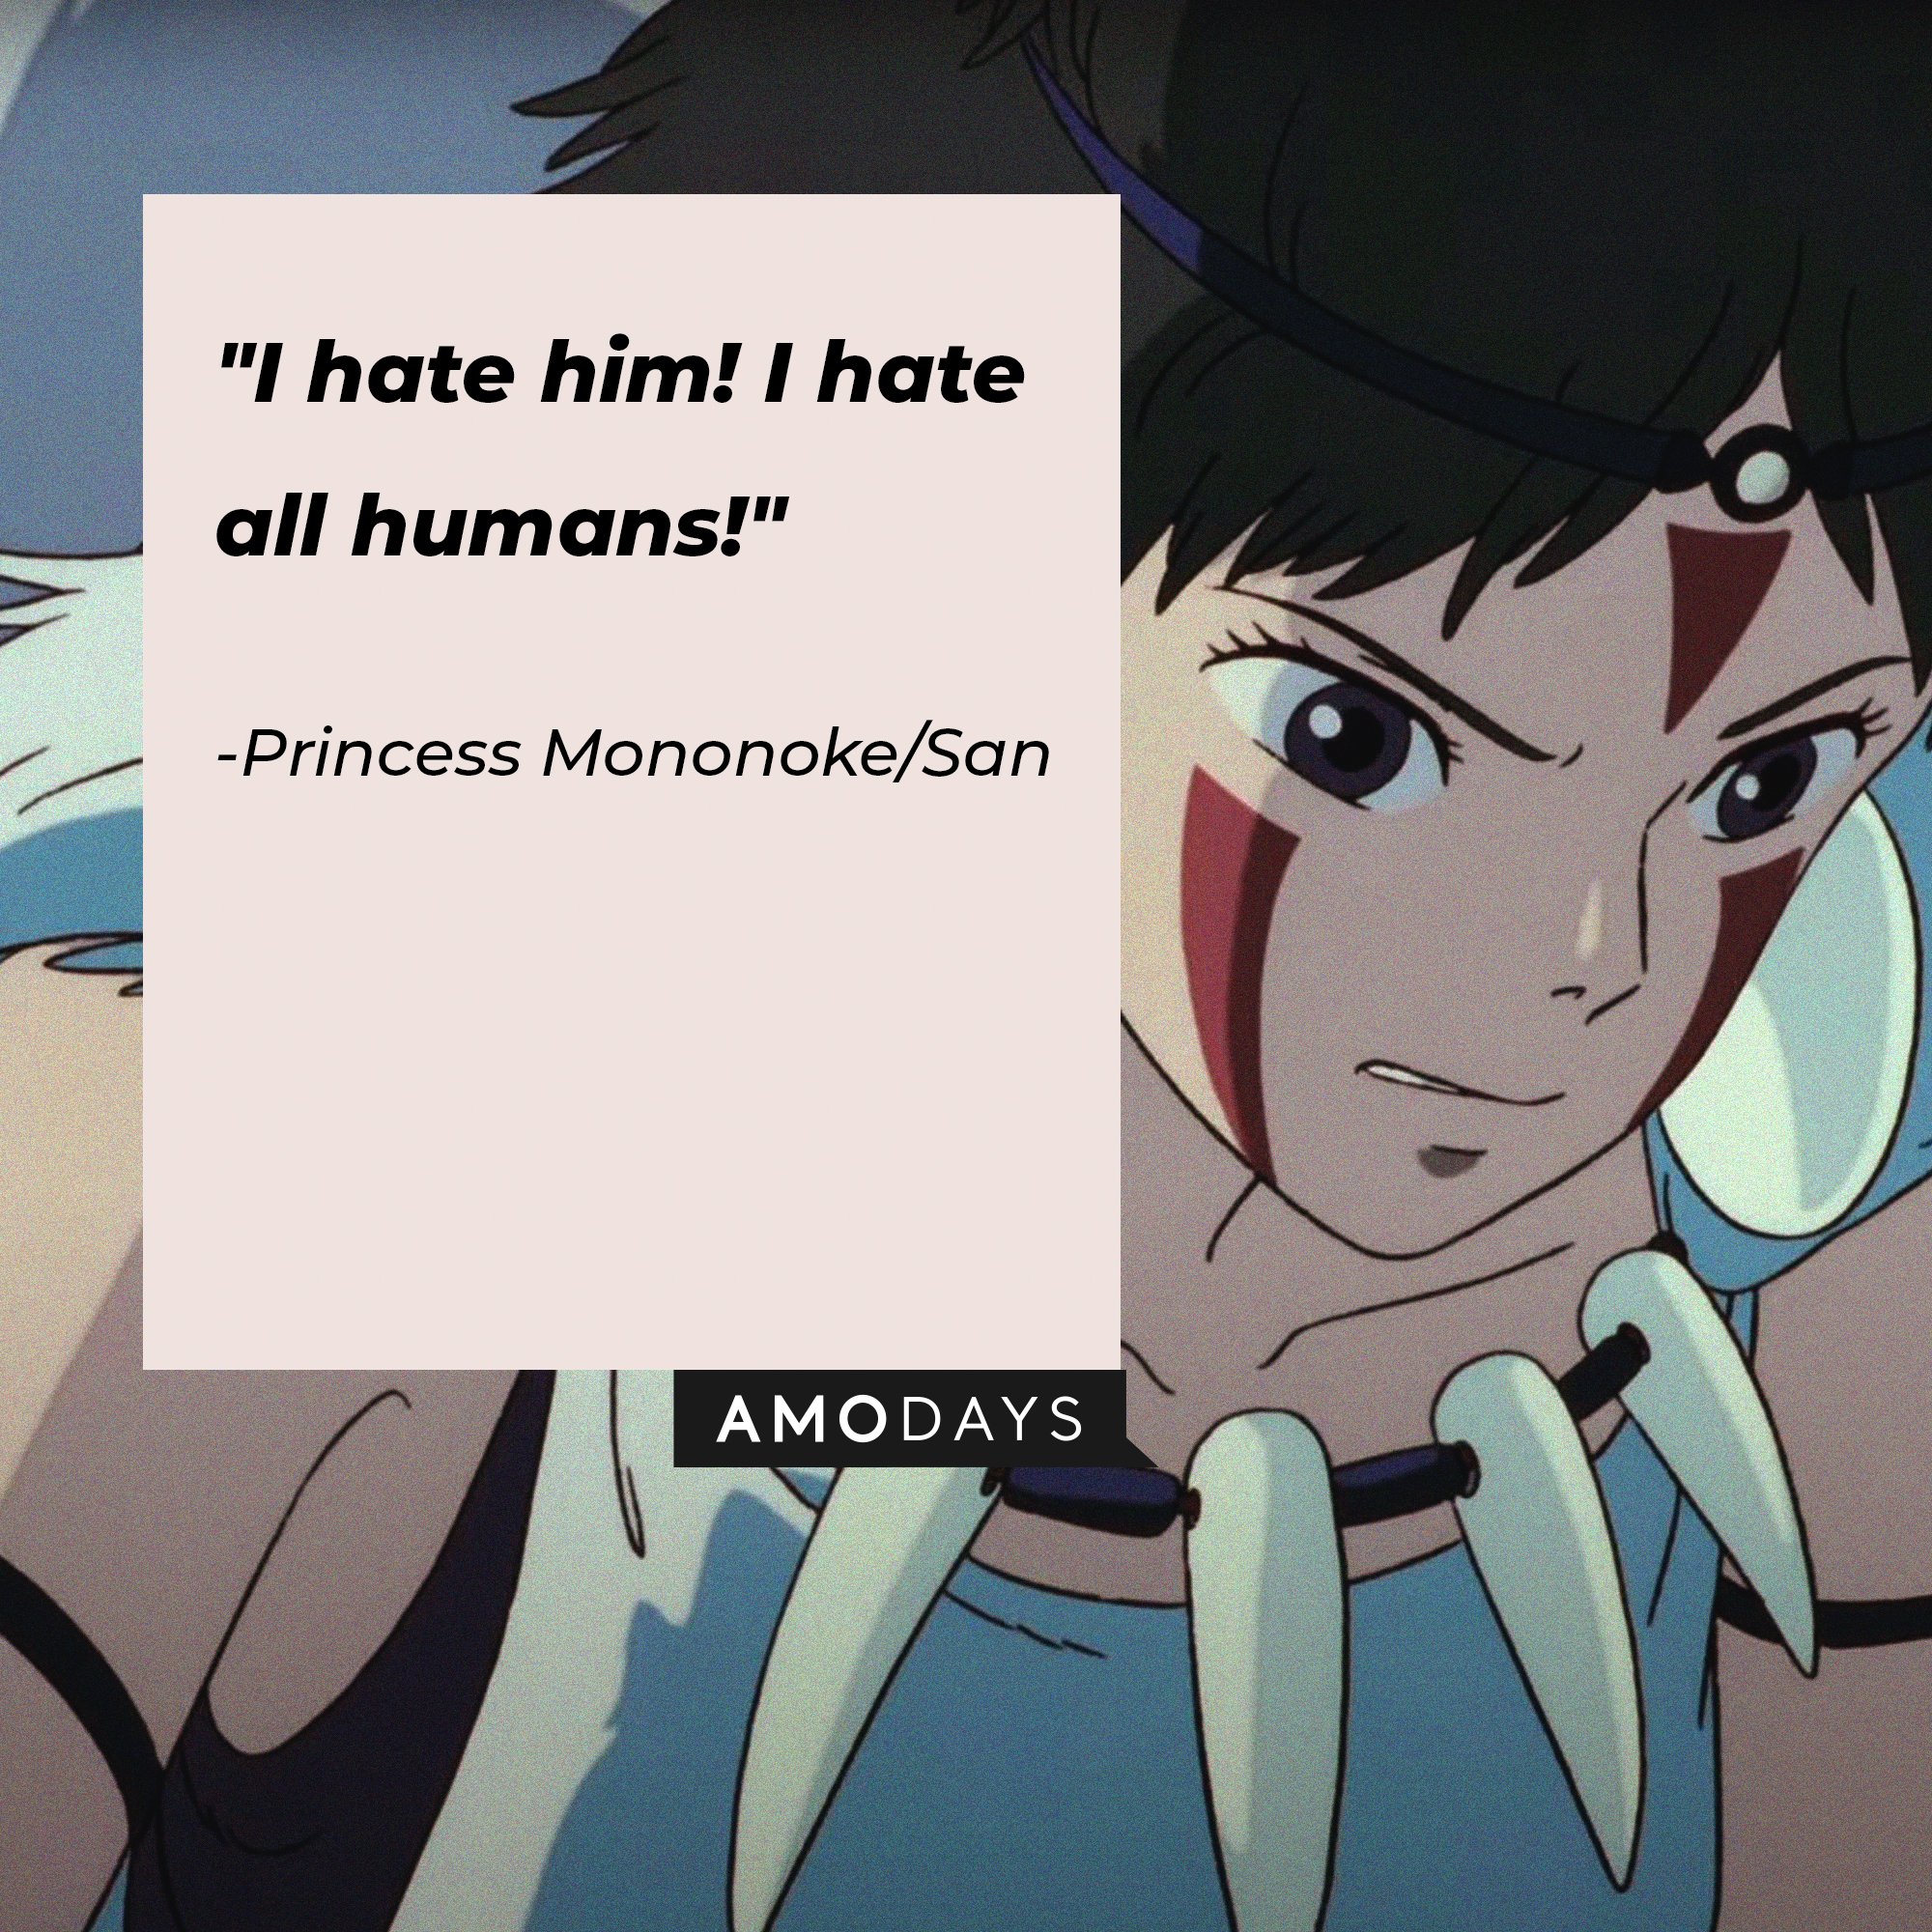 Princess Mononoke/San’s quote: "I hate him! I hate all humans!" | Image: AmoDays